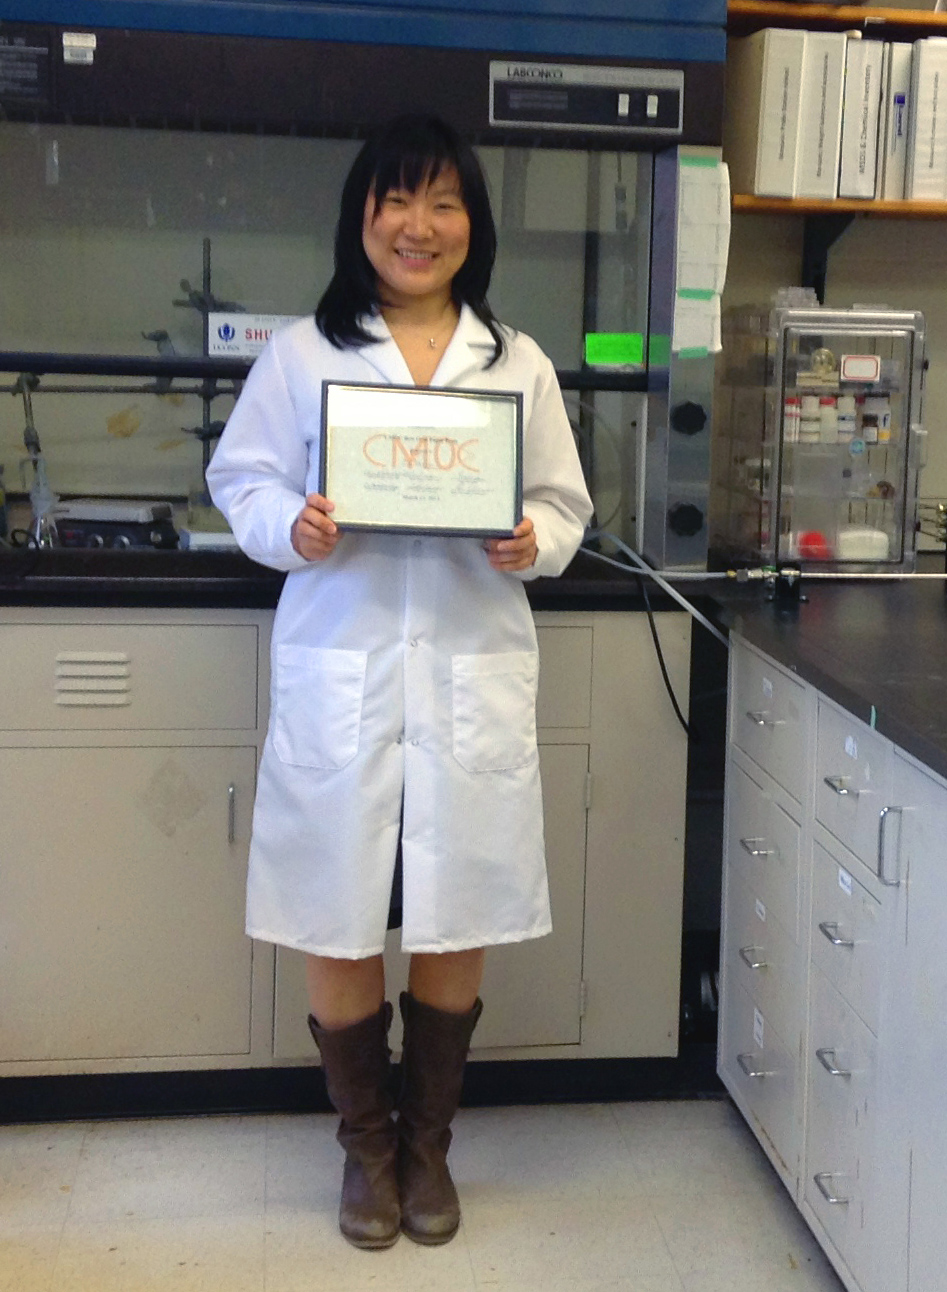 MSE Ph.D. student Jialan Zhang